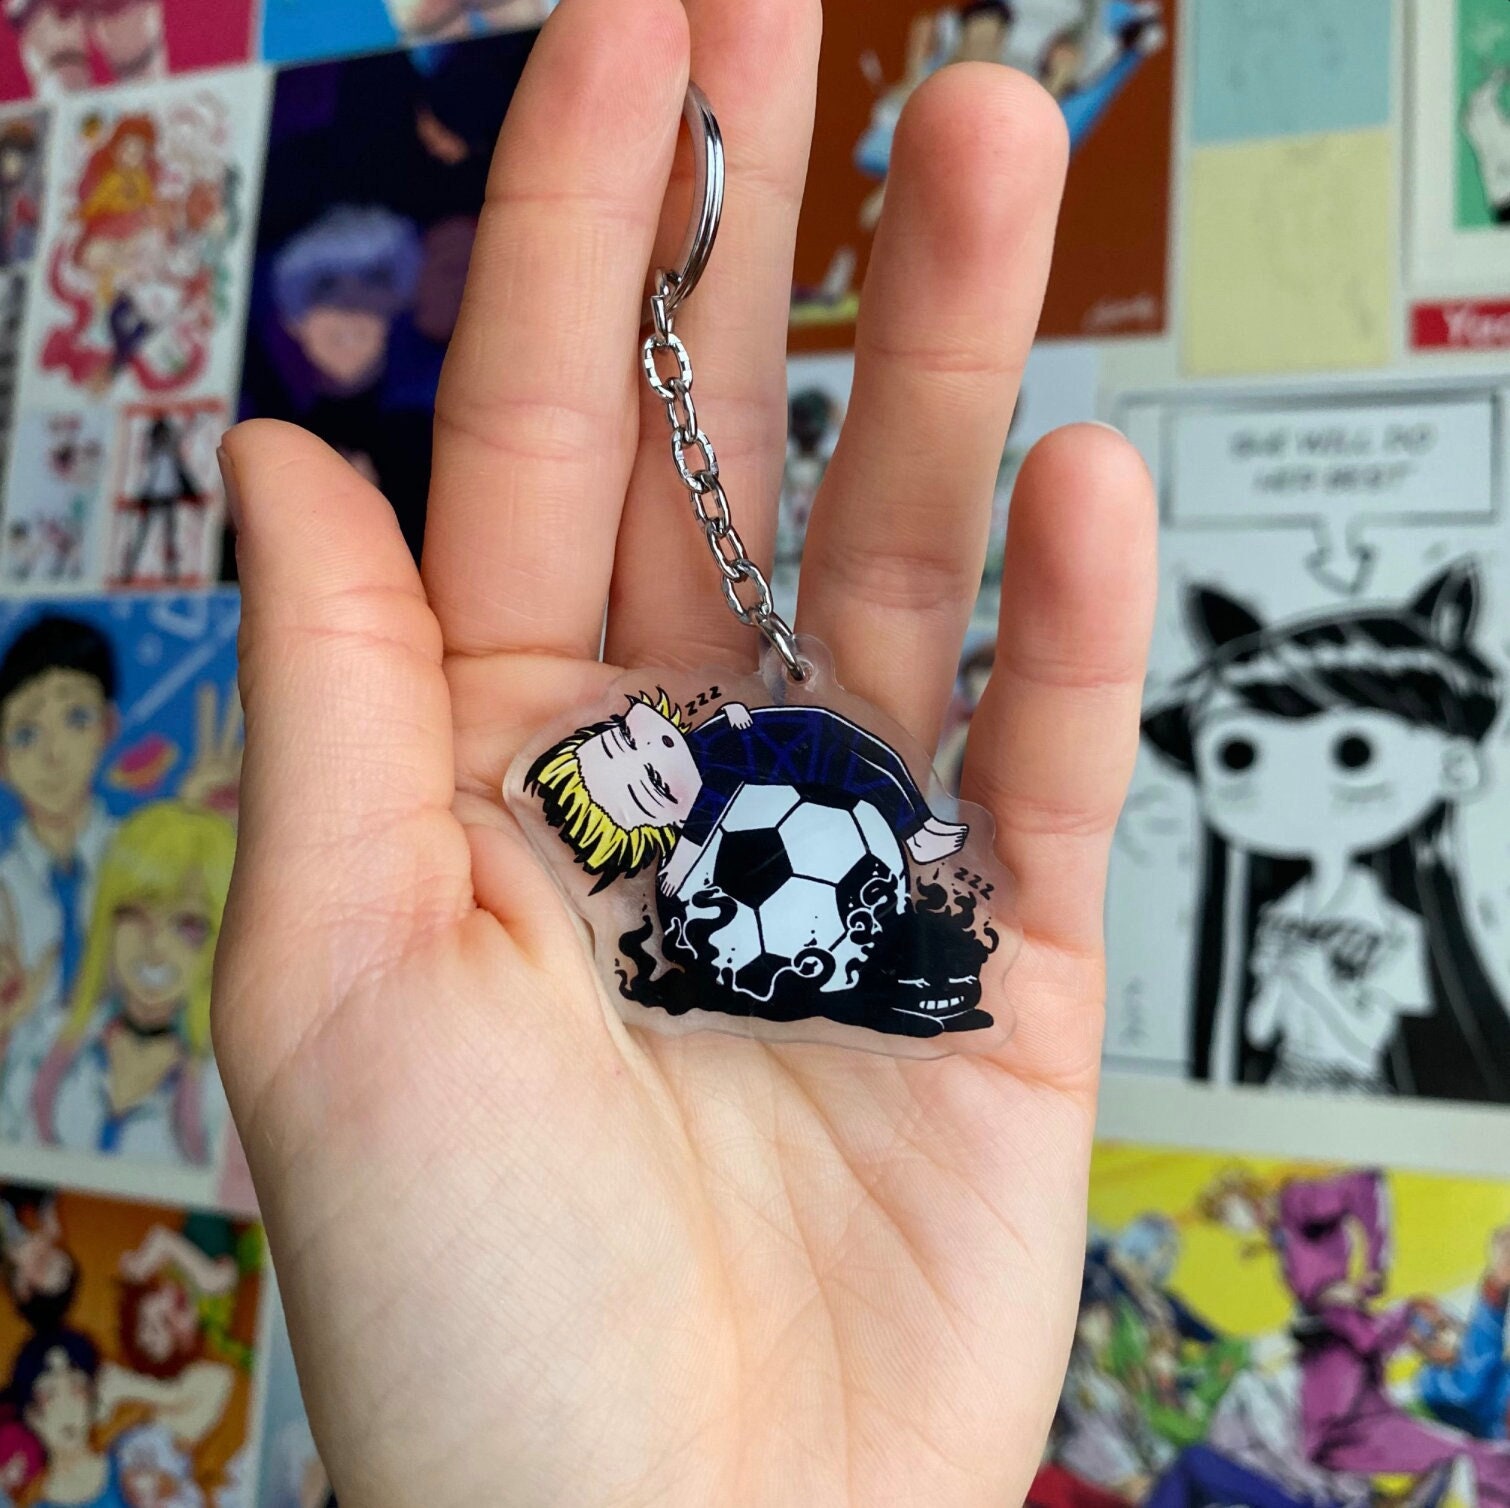 10CM Anime Blue Lock Keychain Bachira Meguru Mikage Reo Mini